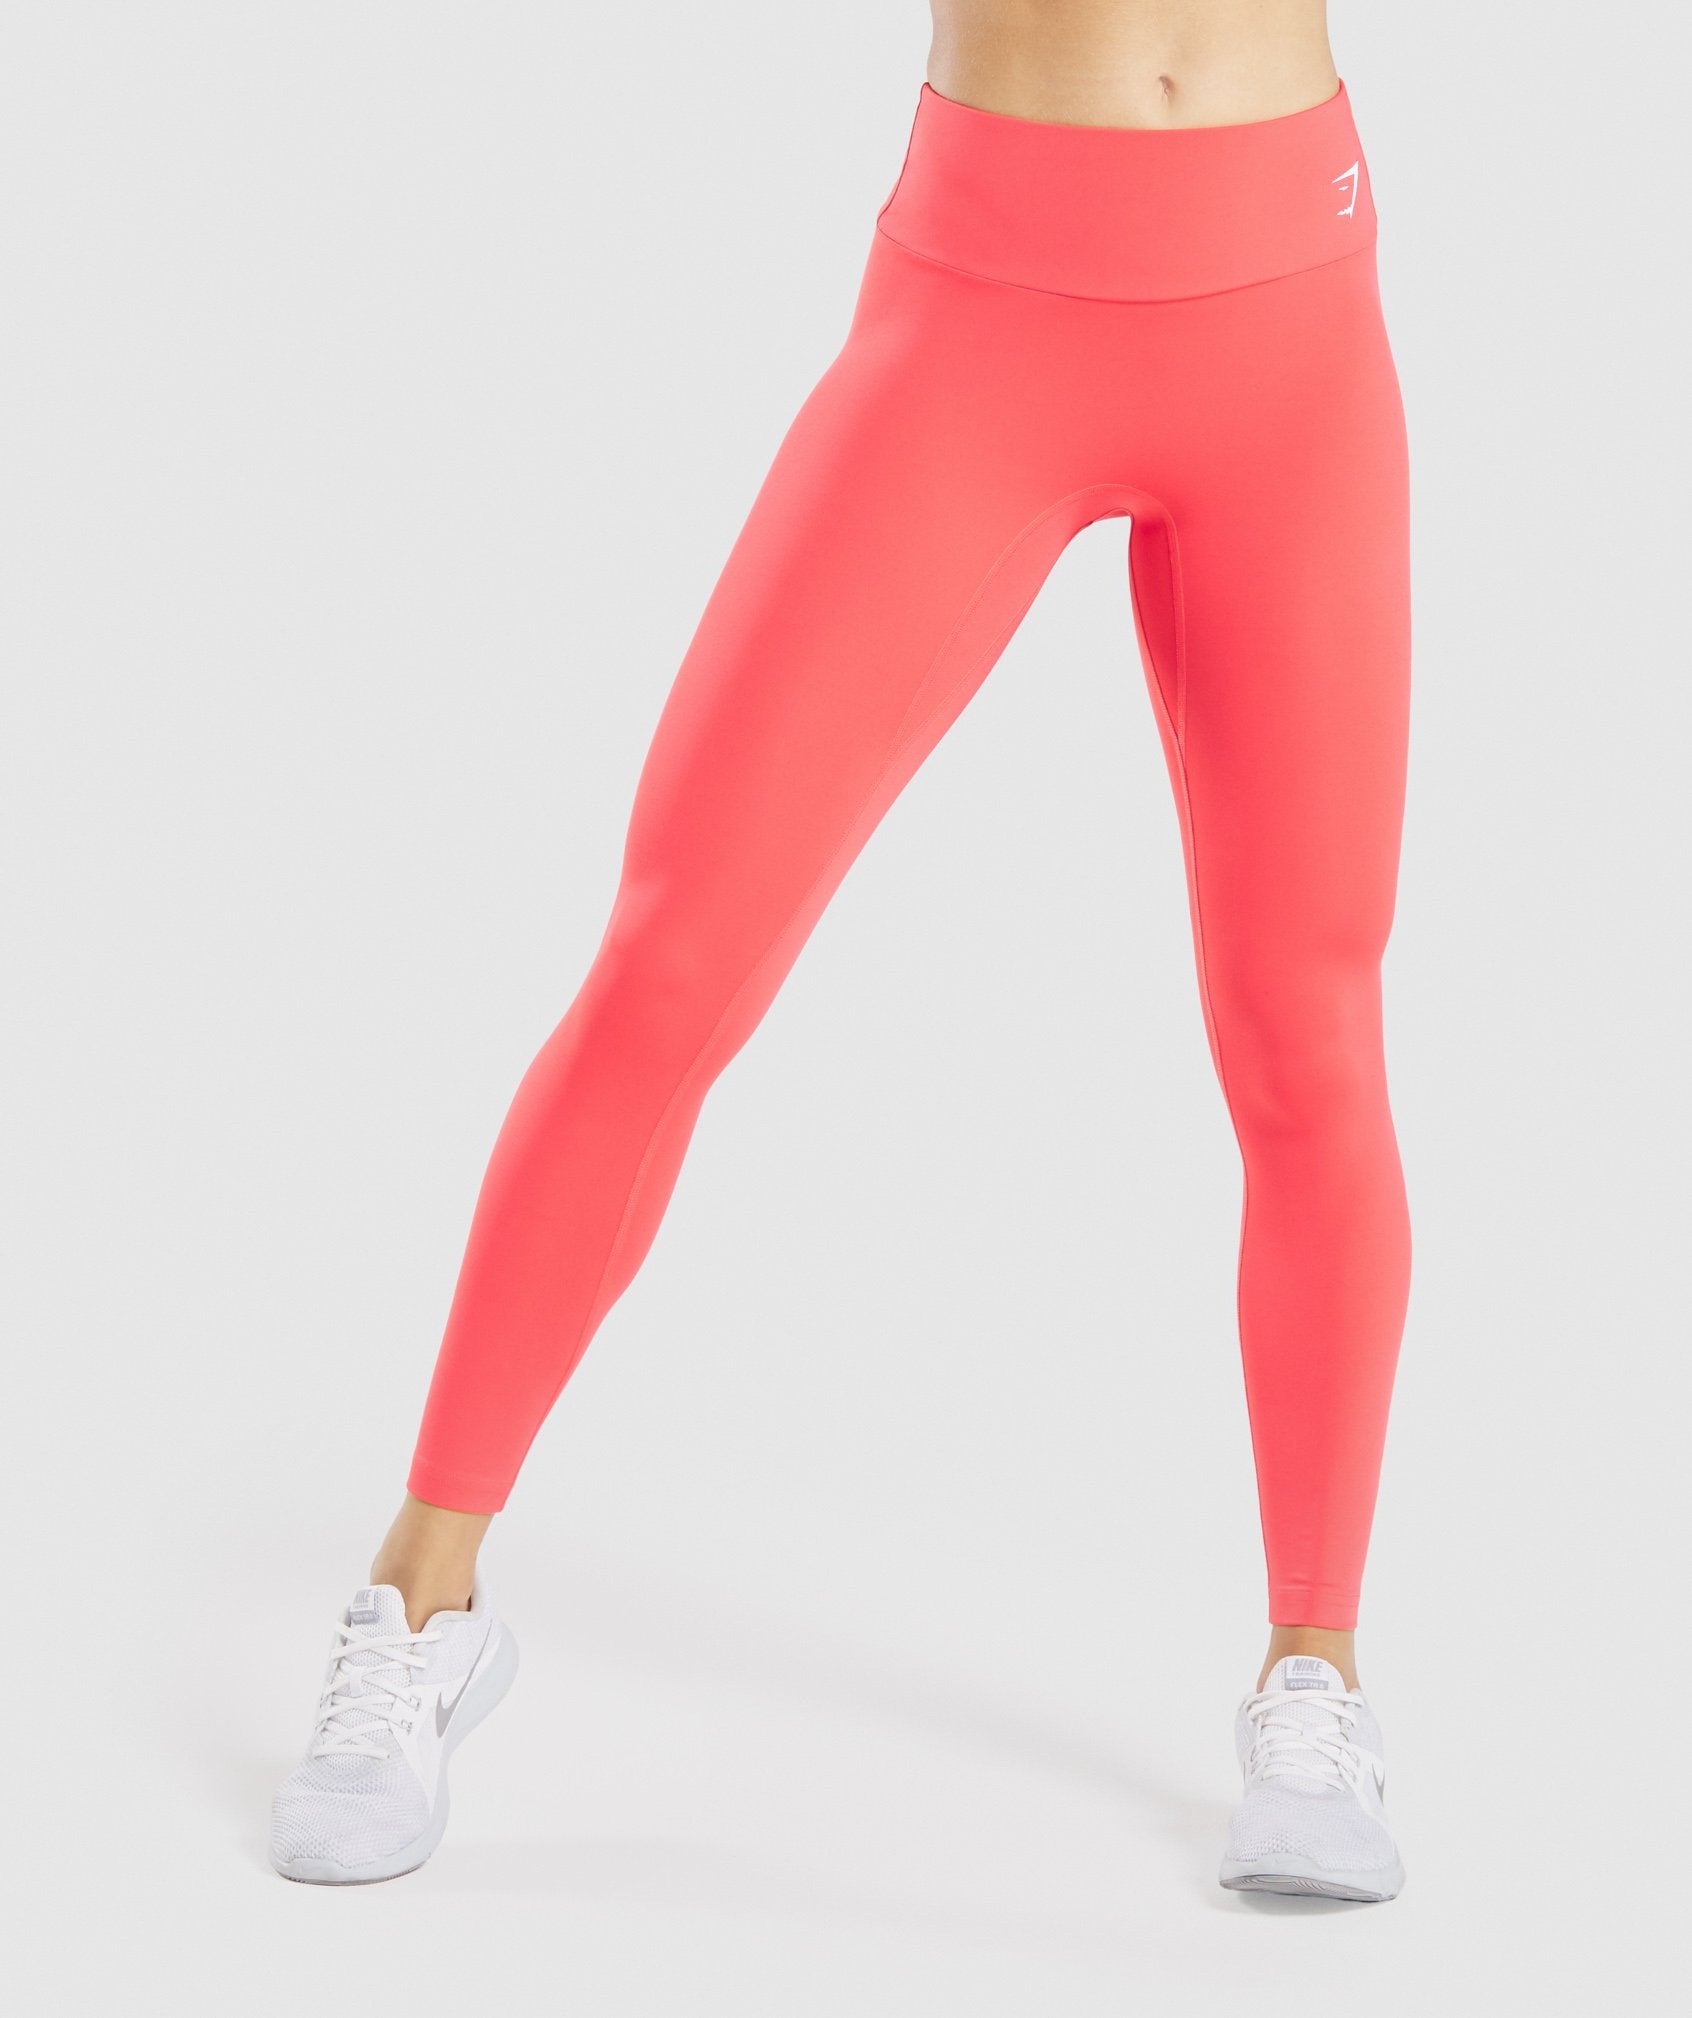 gymshark vital seamless leggings! in perfect - Depop